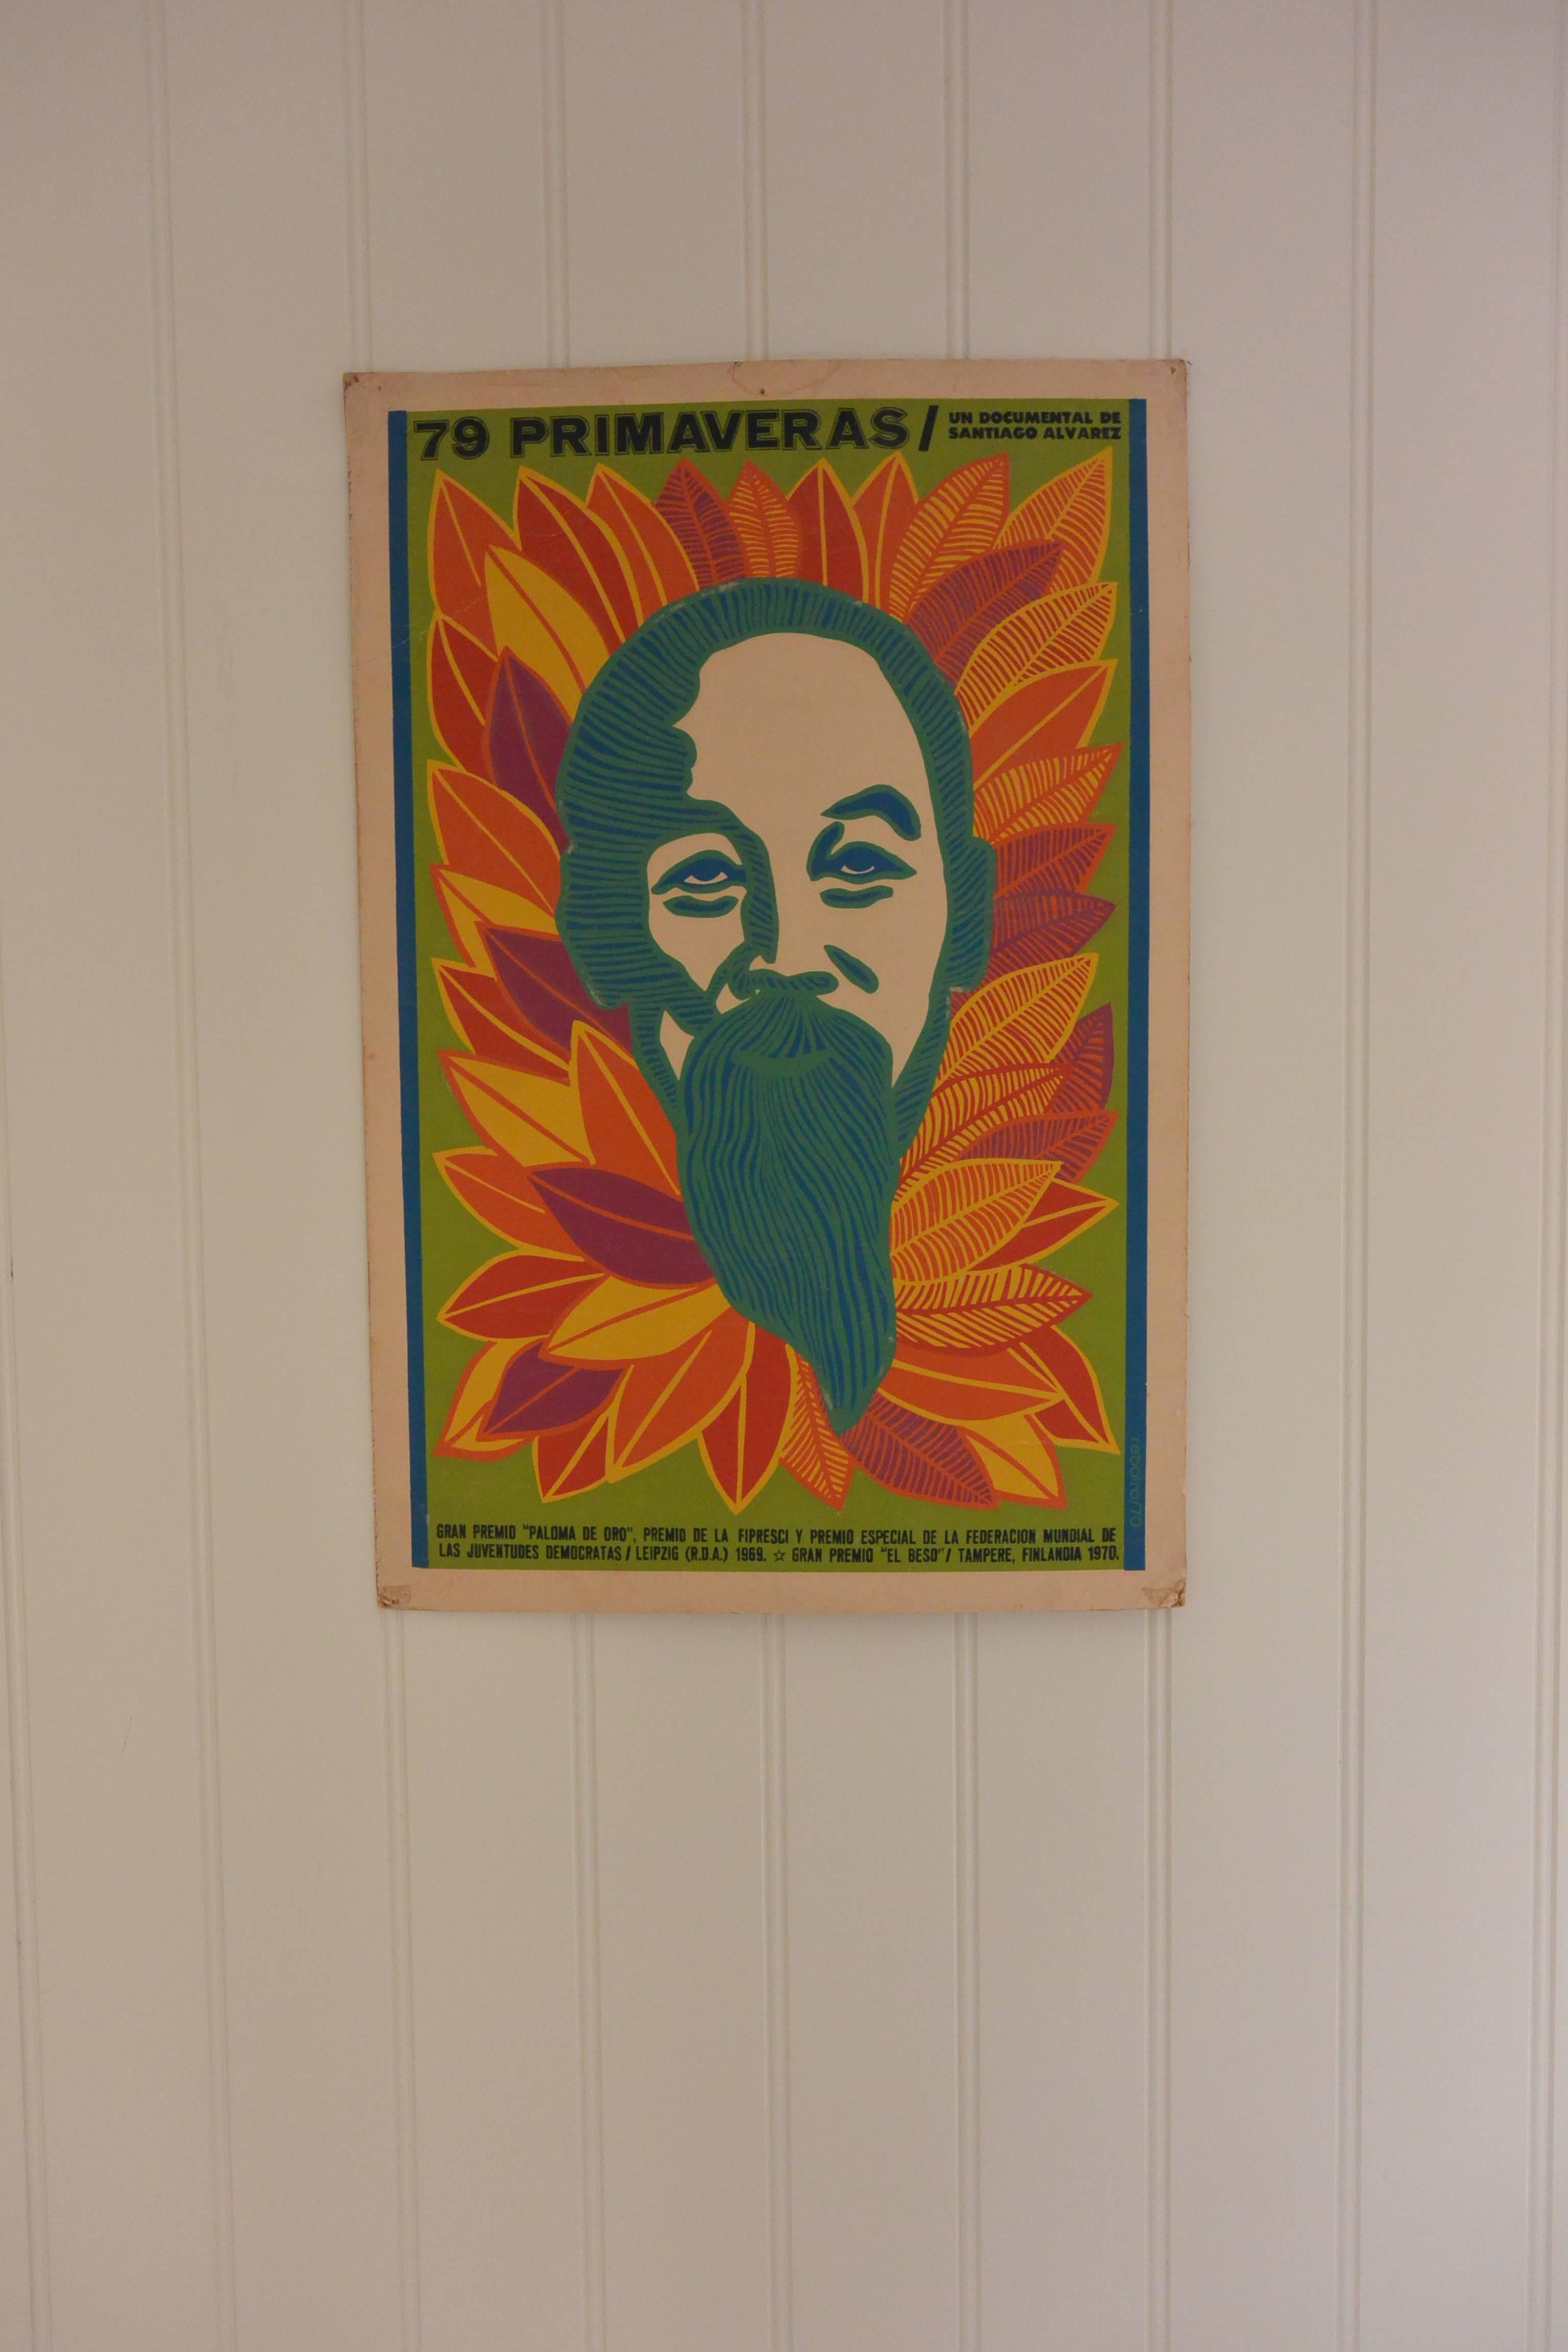 Pressed Original Political Poster Art, Norwegian, 1970s For Sale